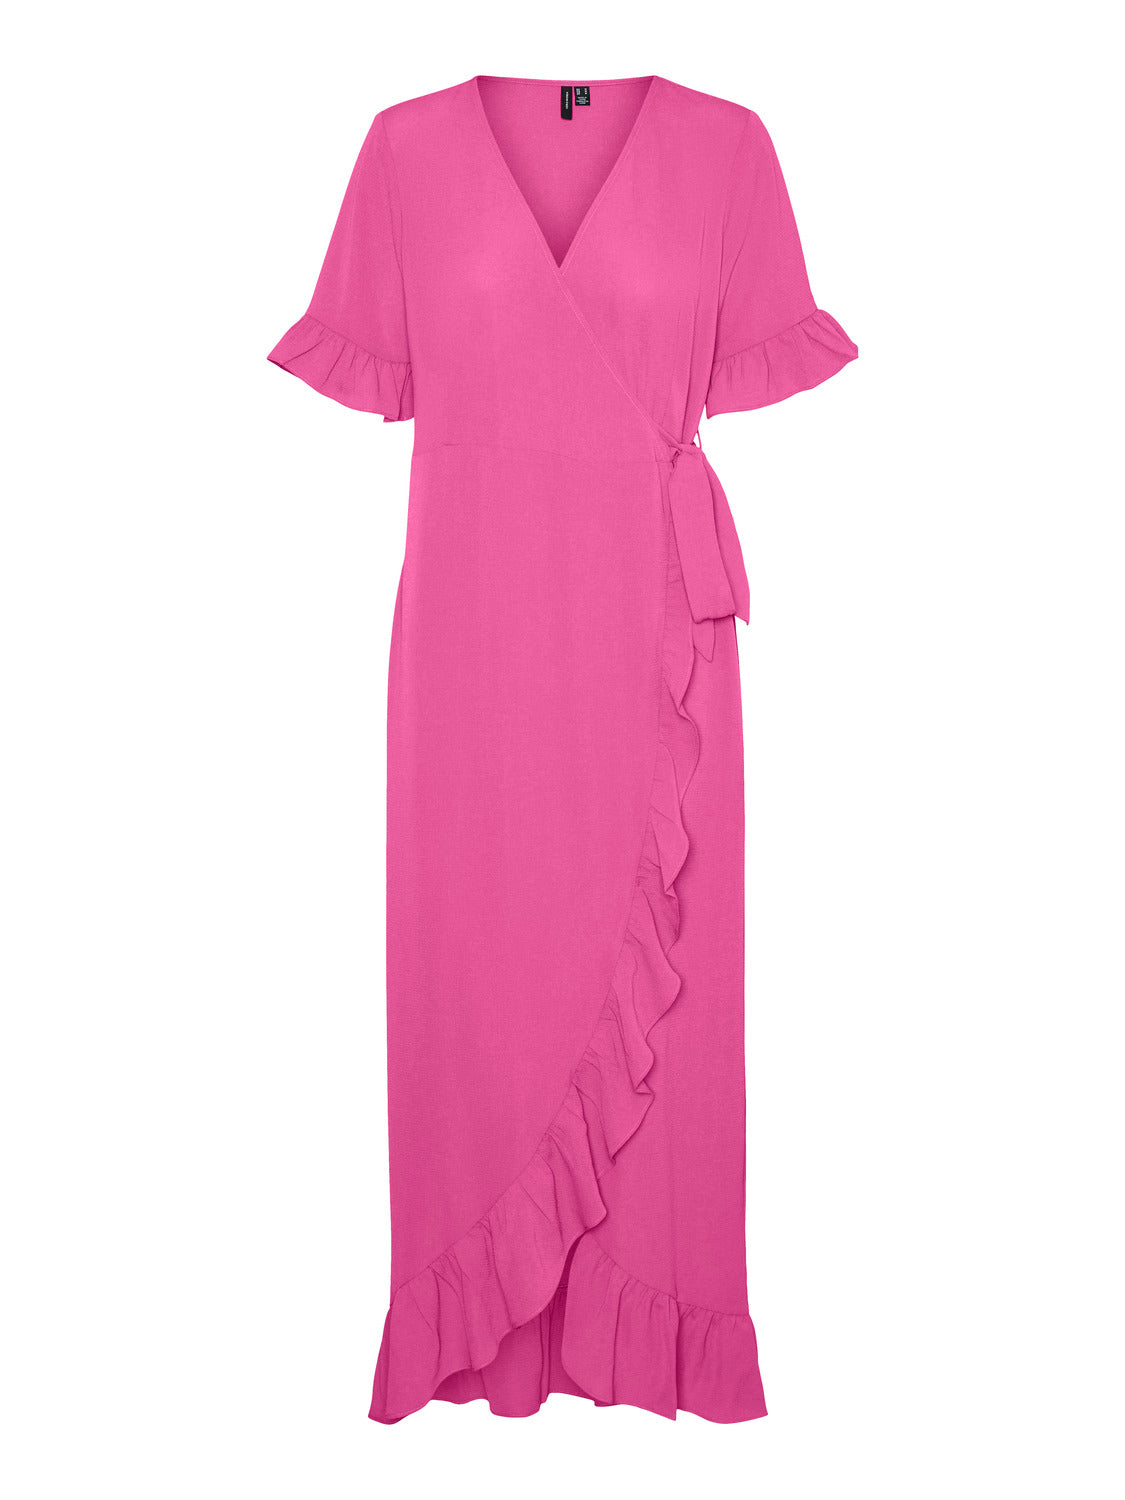 VMSAKO long Dress - Phlox Pink